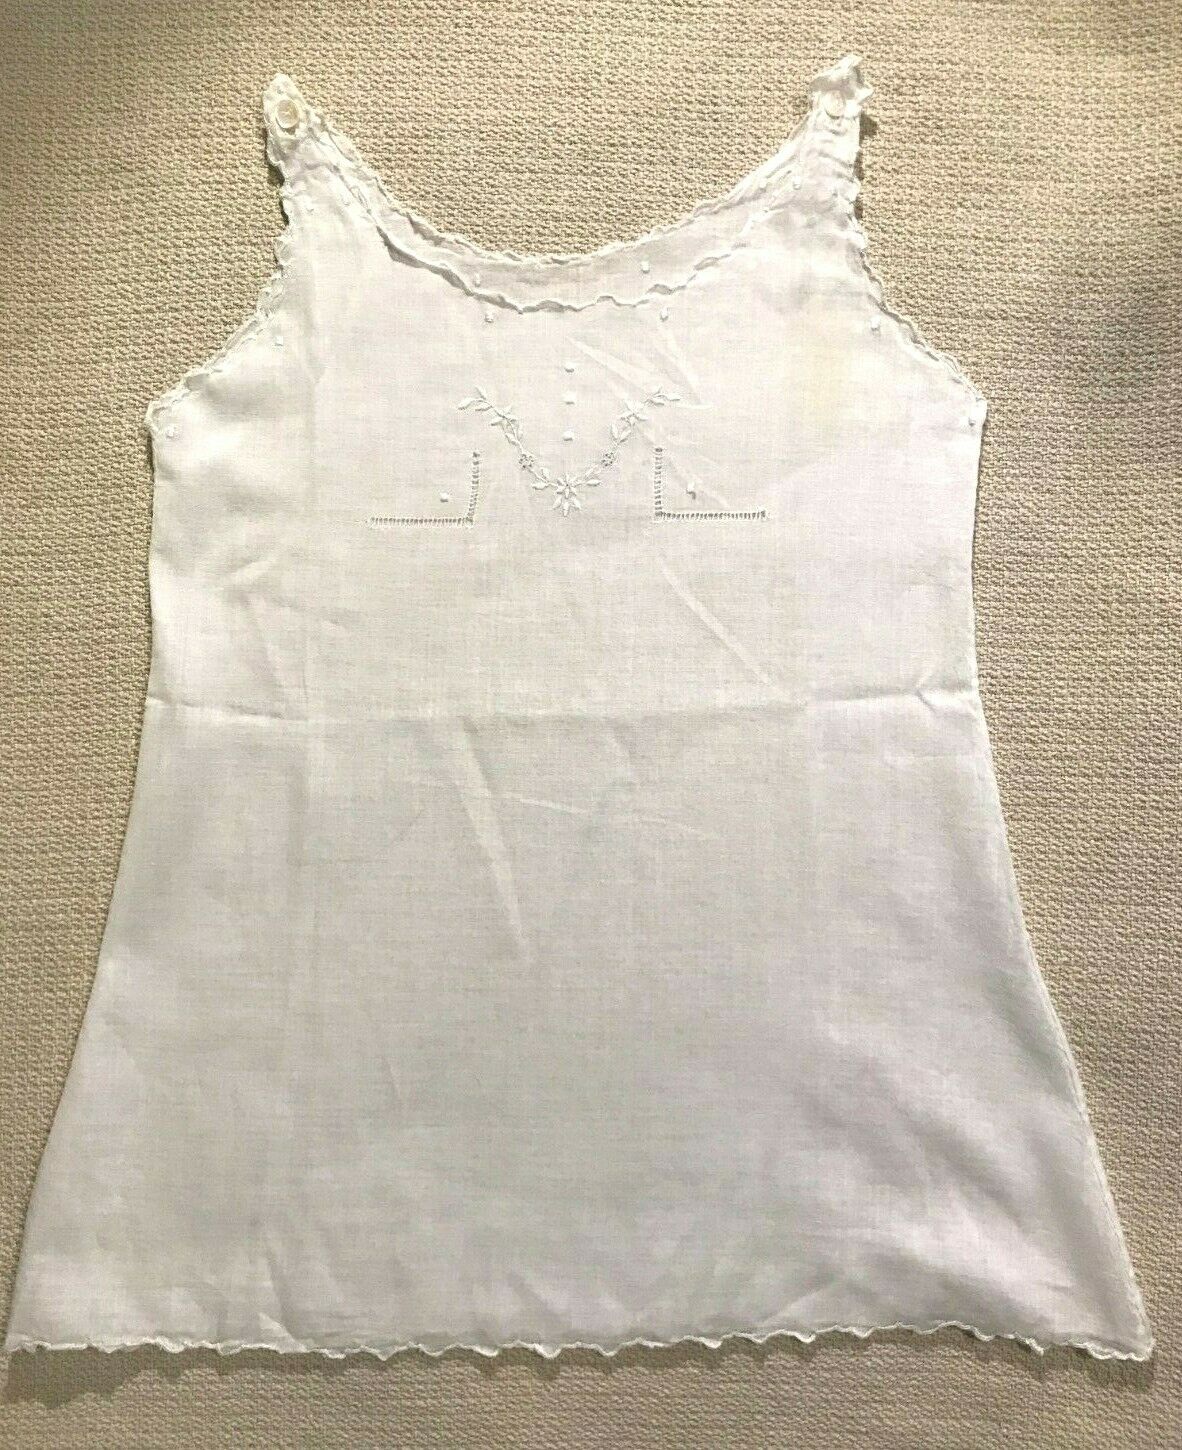 Antique Childrens Slip/under Dress - White -embroidered Late 1920's - #125 (b13)